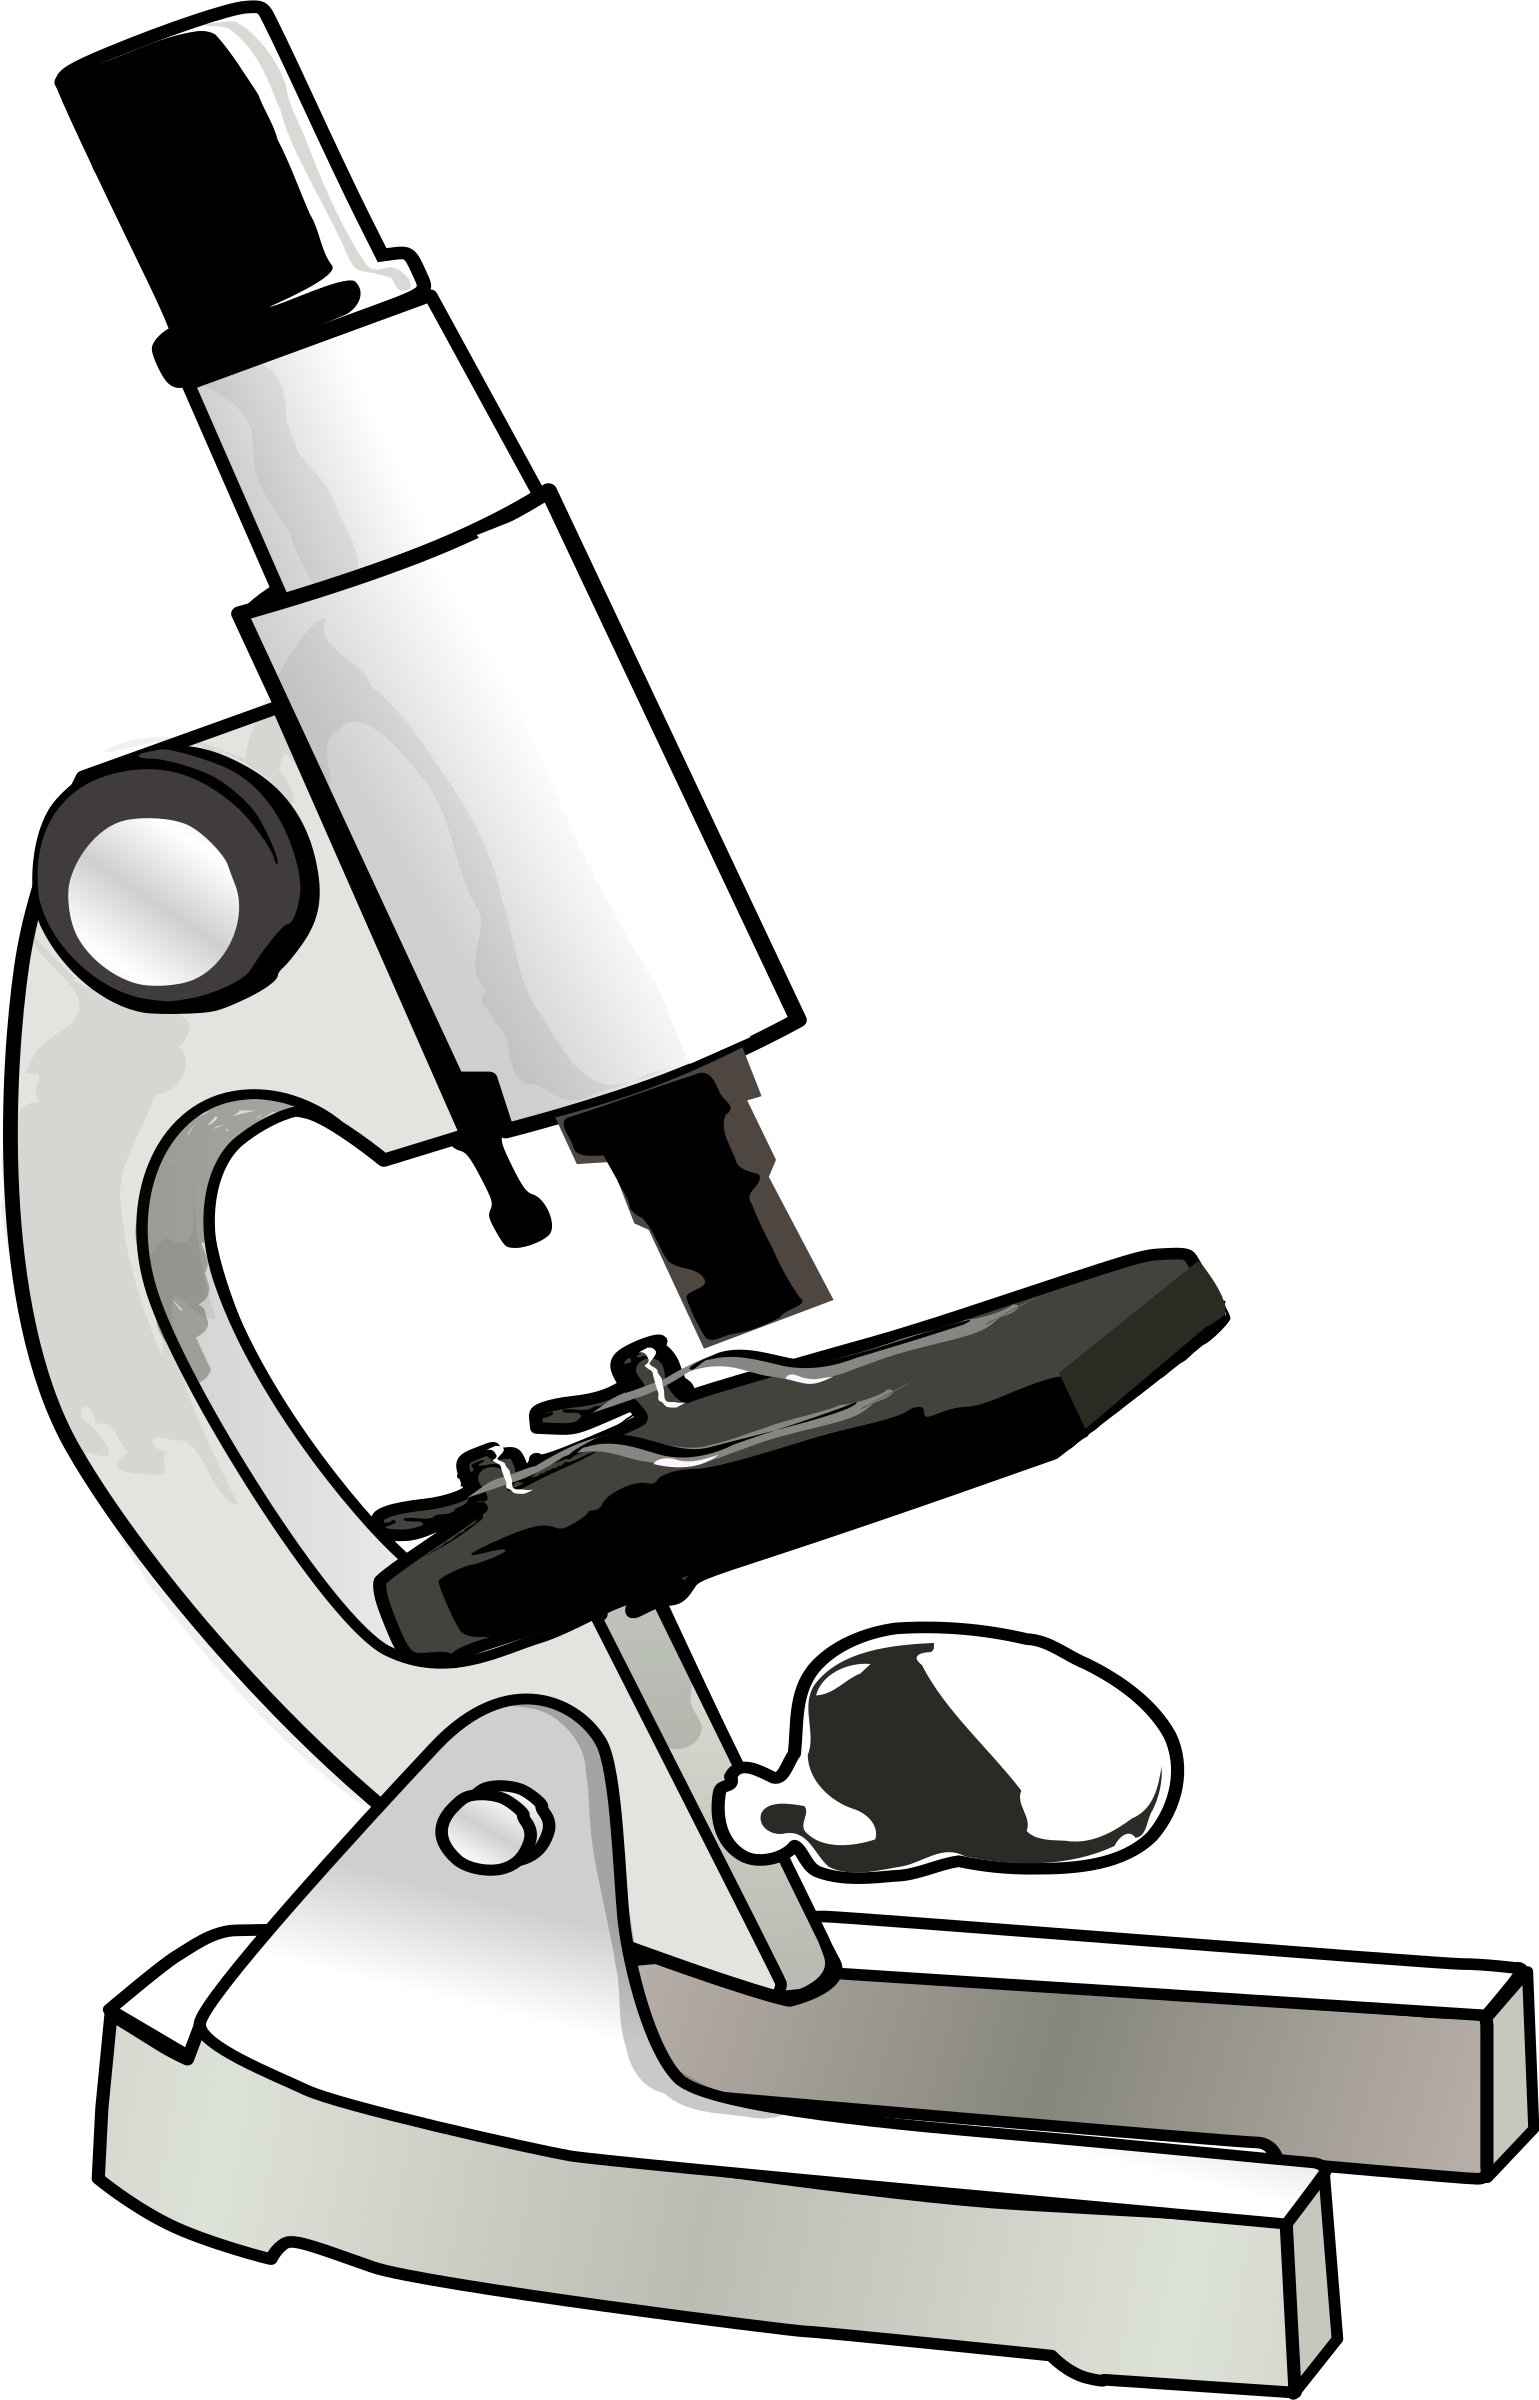 Microscope - Scientist Tools Clipart (1539x2400)